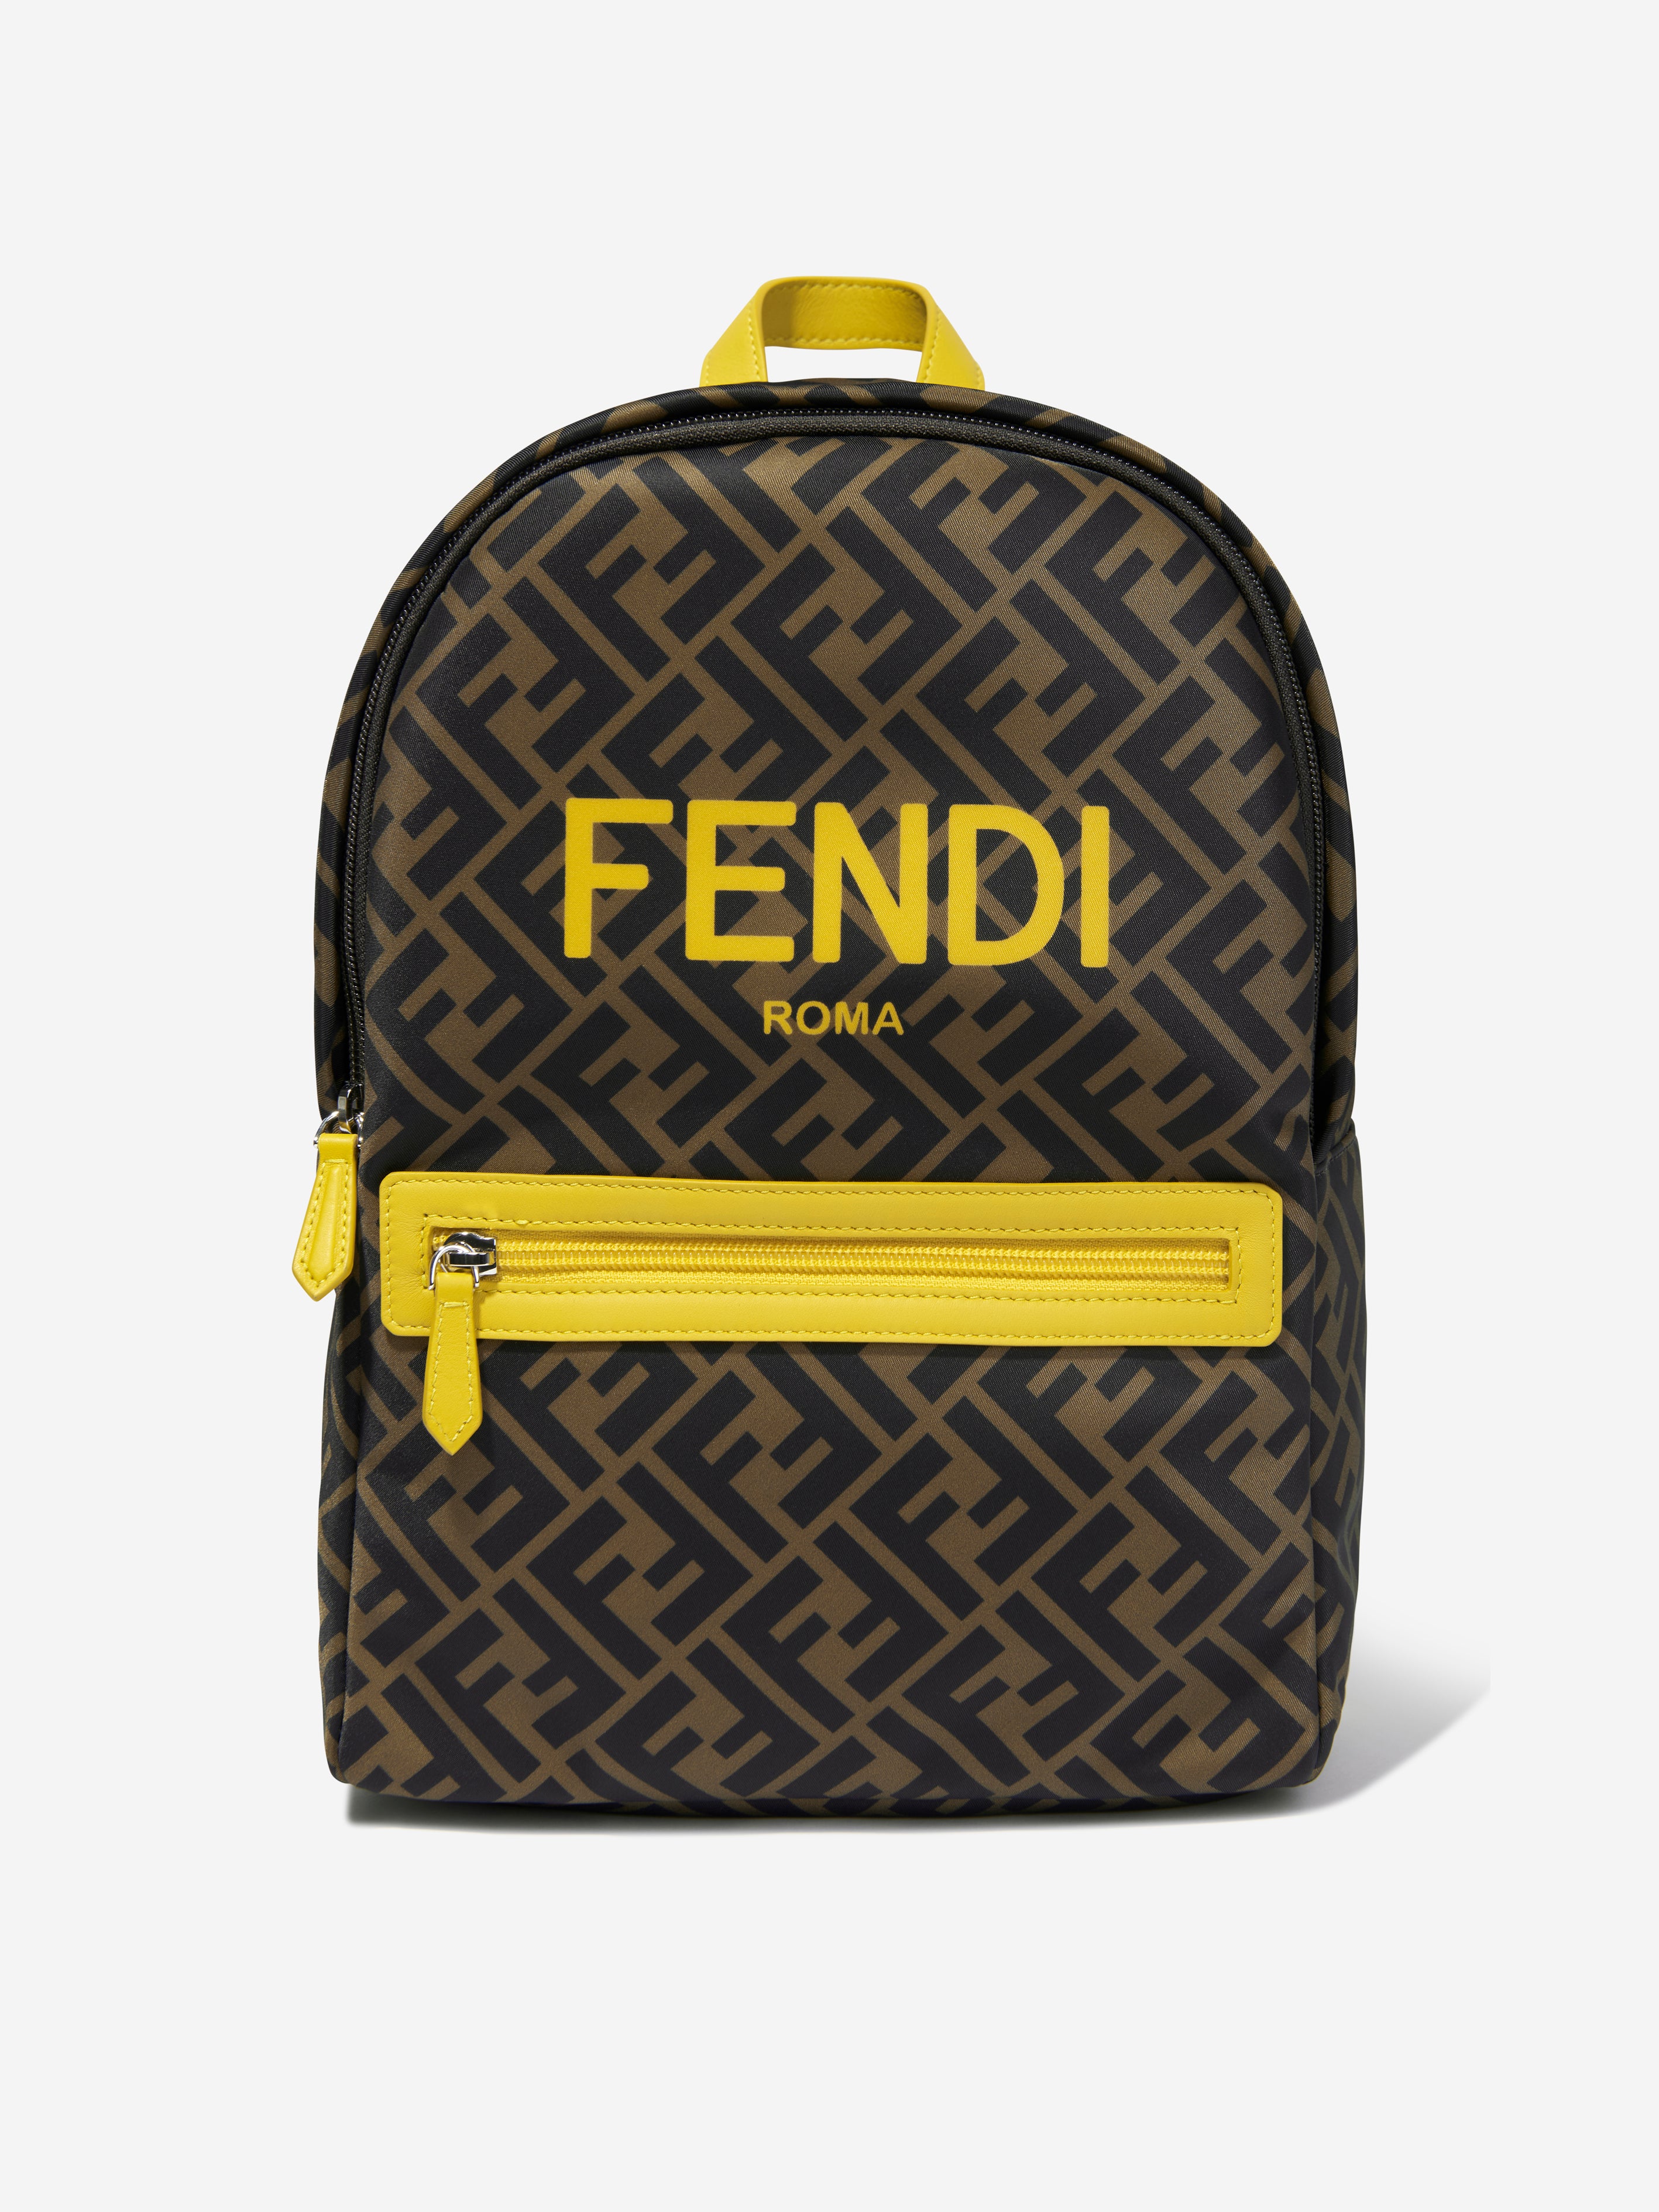 Fendi Kids FF Print Stroller - Brown - One Size